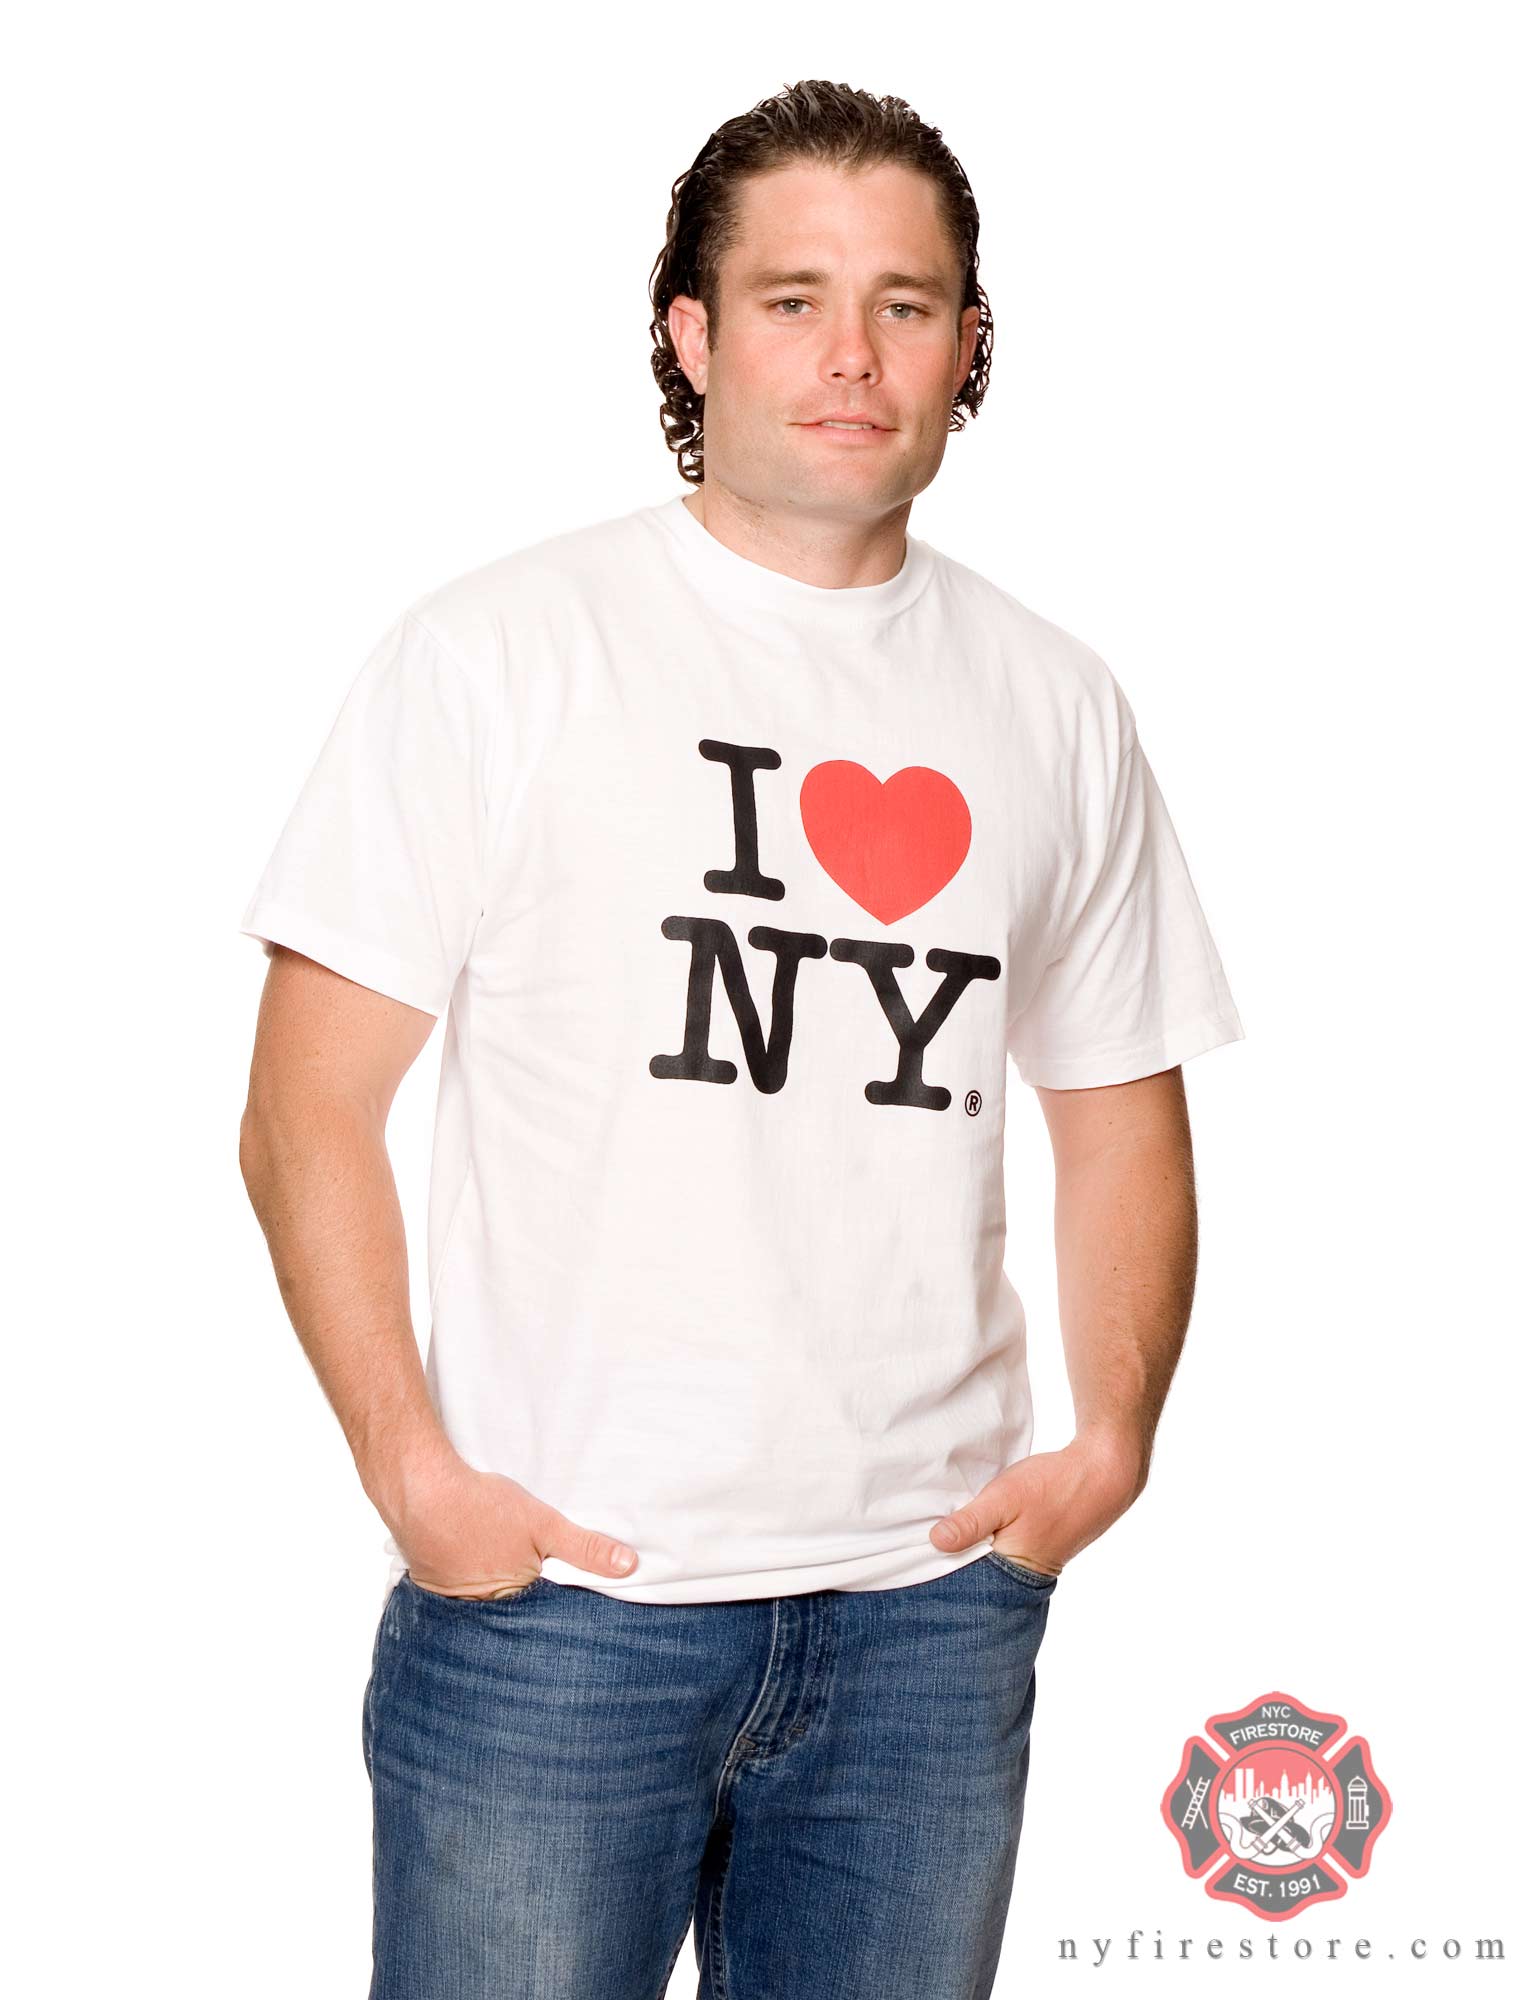 møl konsonant ukuelige I Love NY T-Shirt